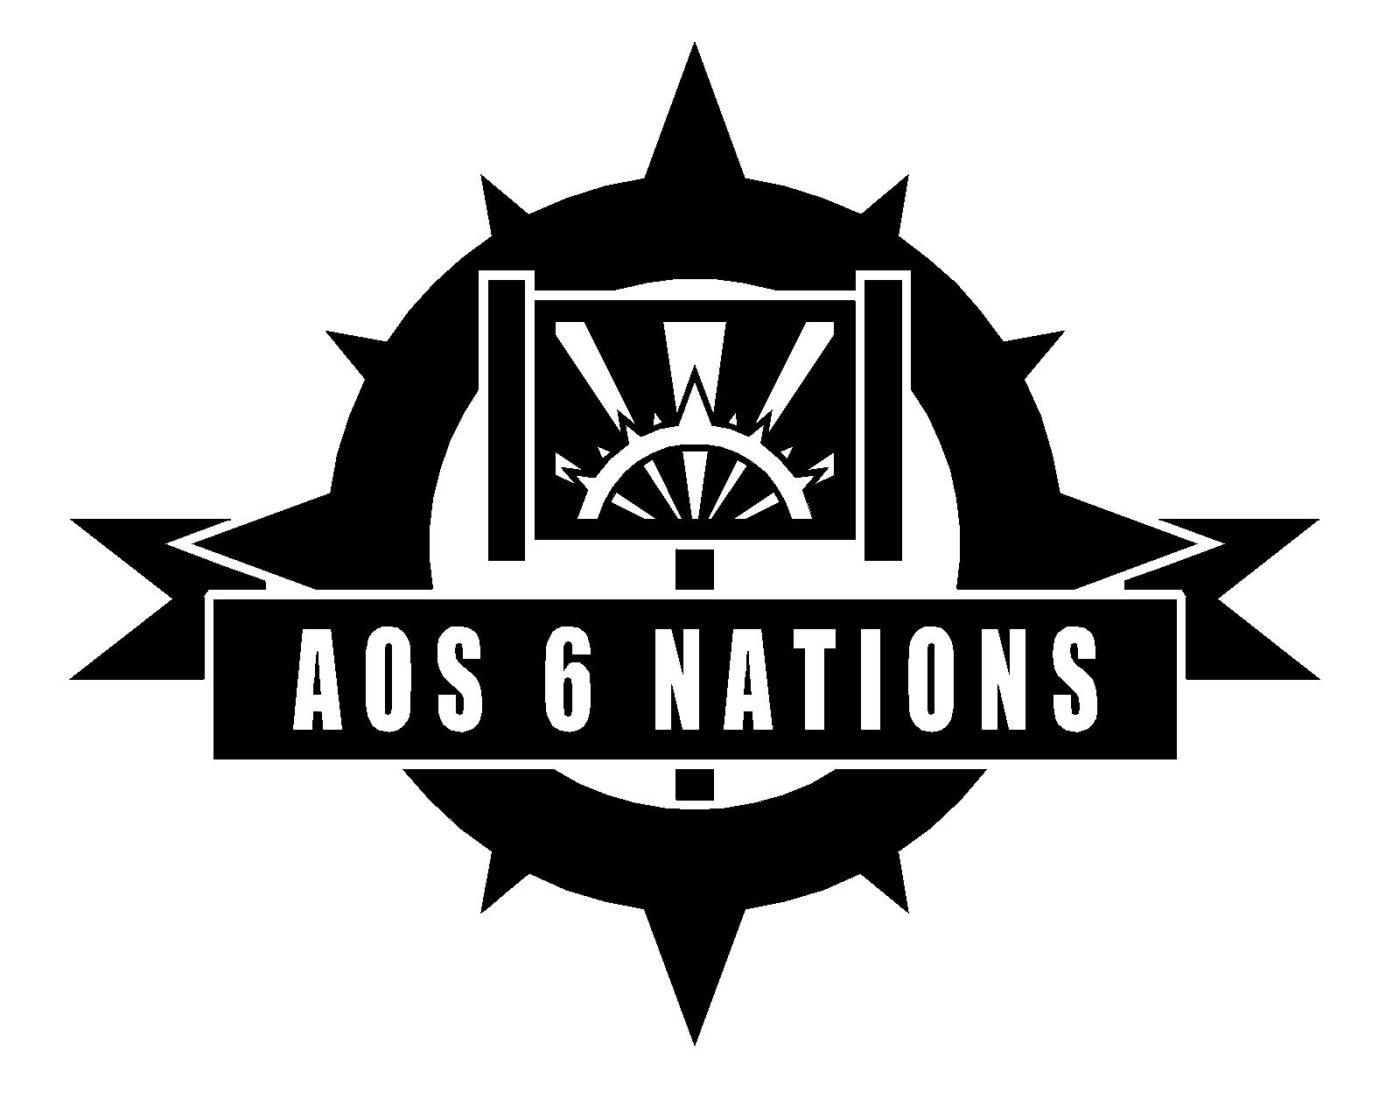 AoS 6 Nations